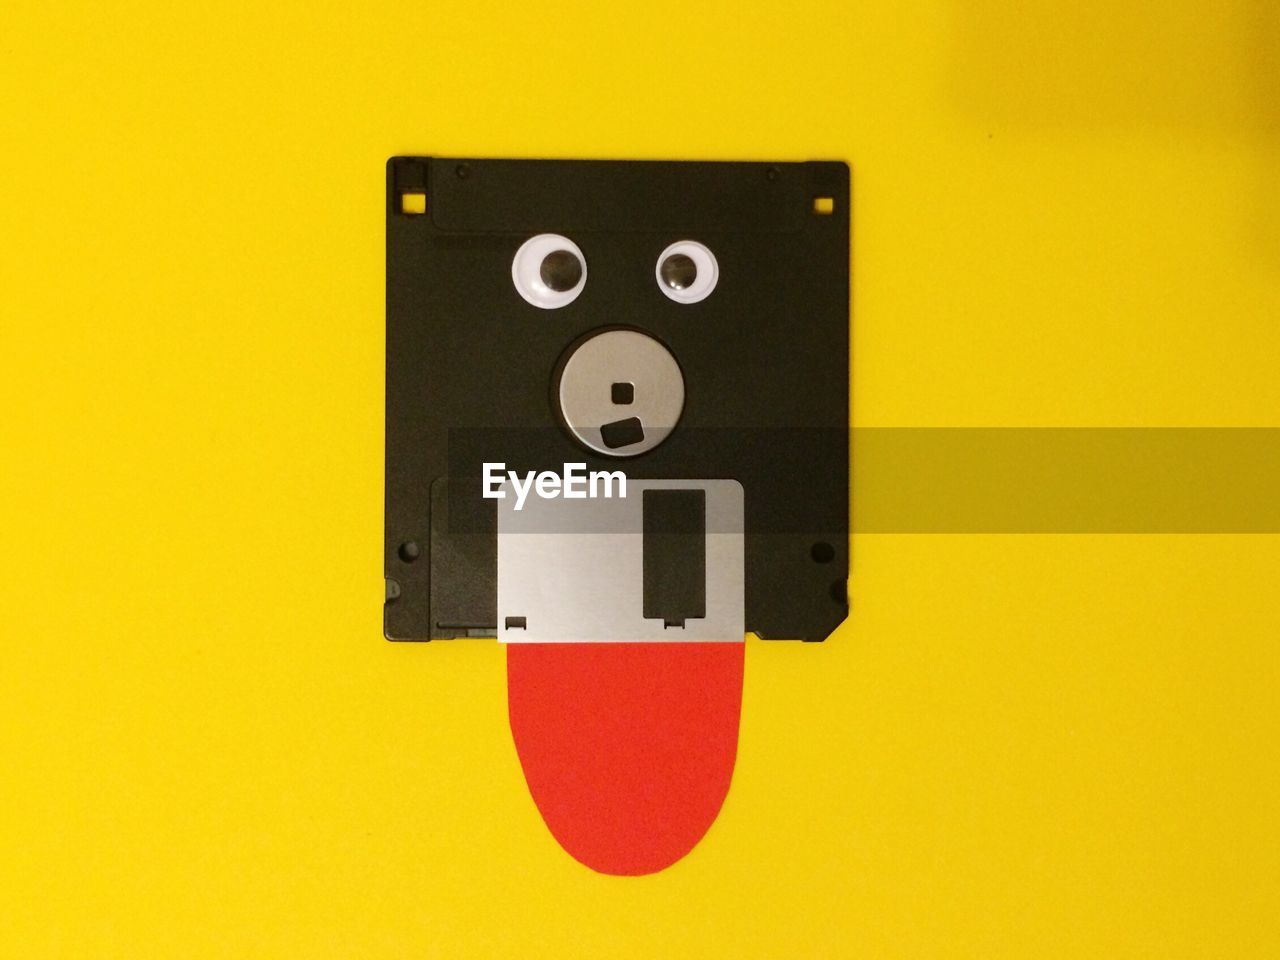 Anthropomorphic floppy disk against yellow background